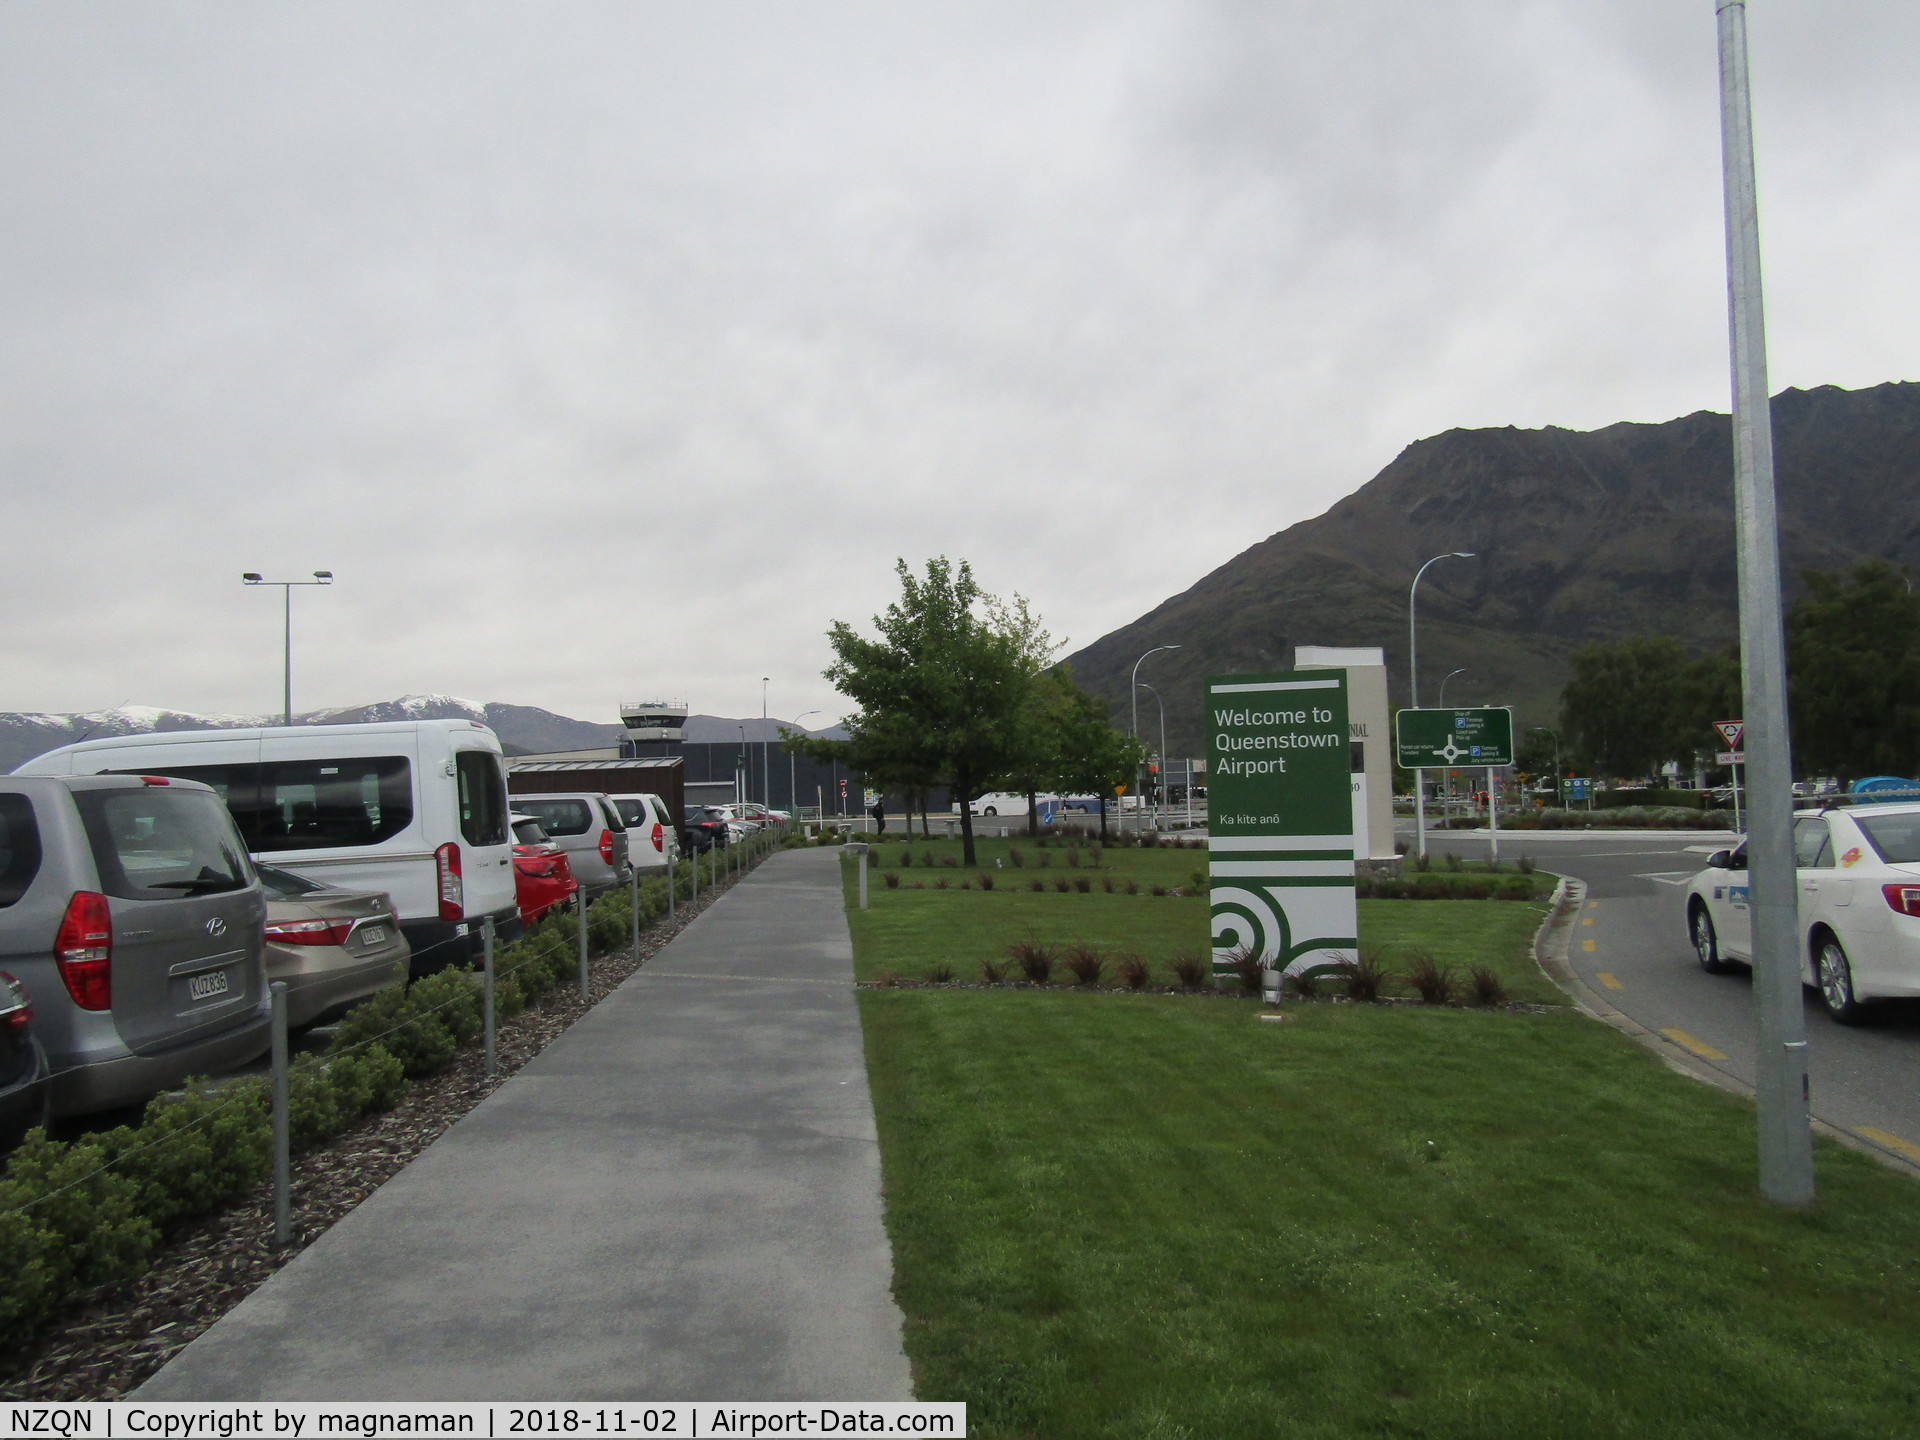 Queenstown Airport, Queenstown New Zealand (NZQN) - at entrance off main road